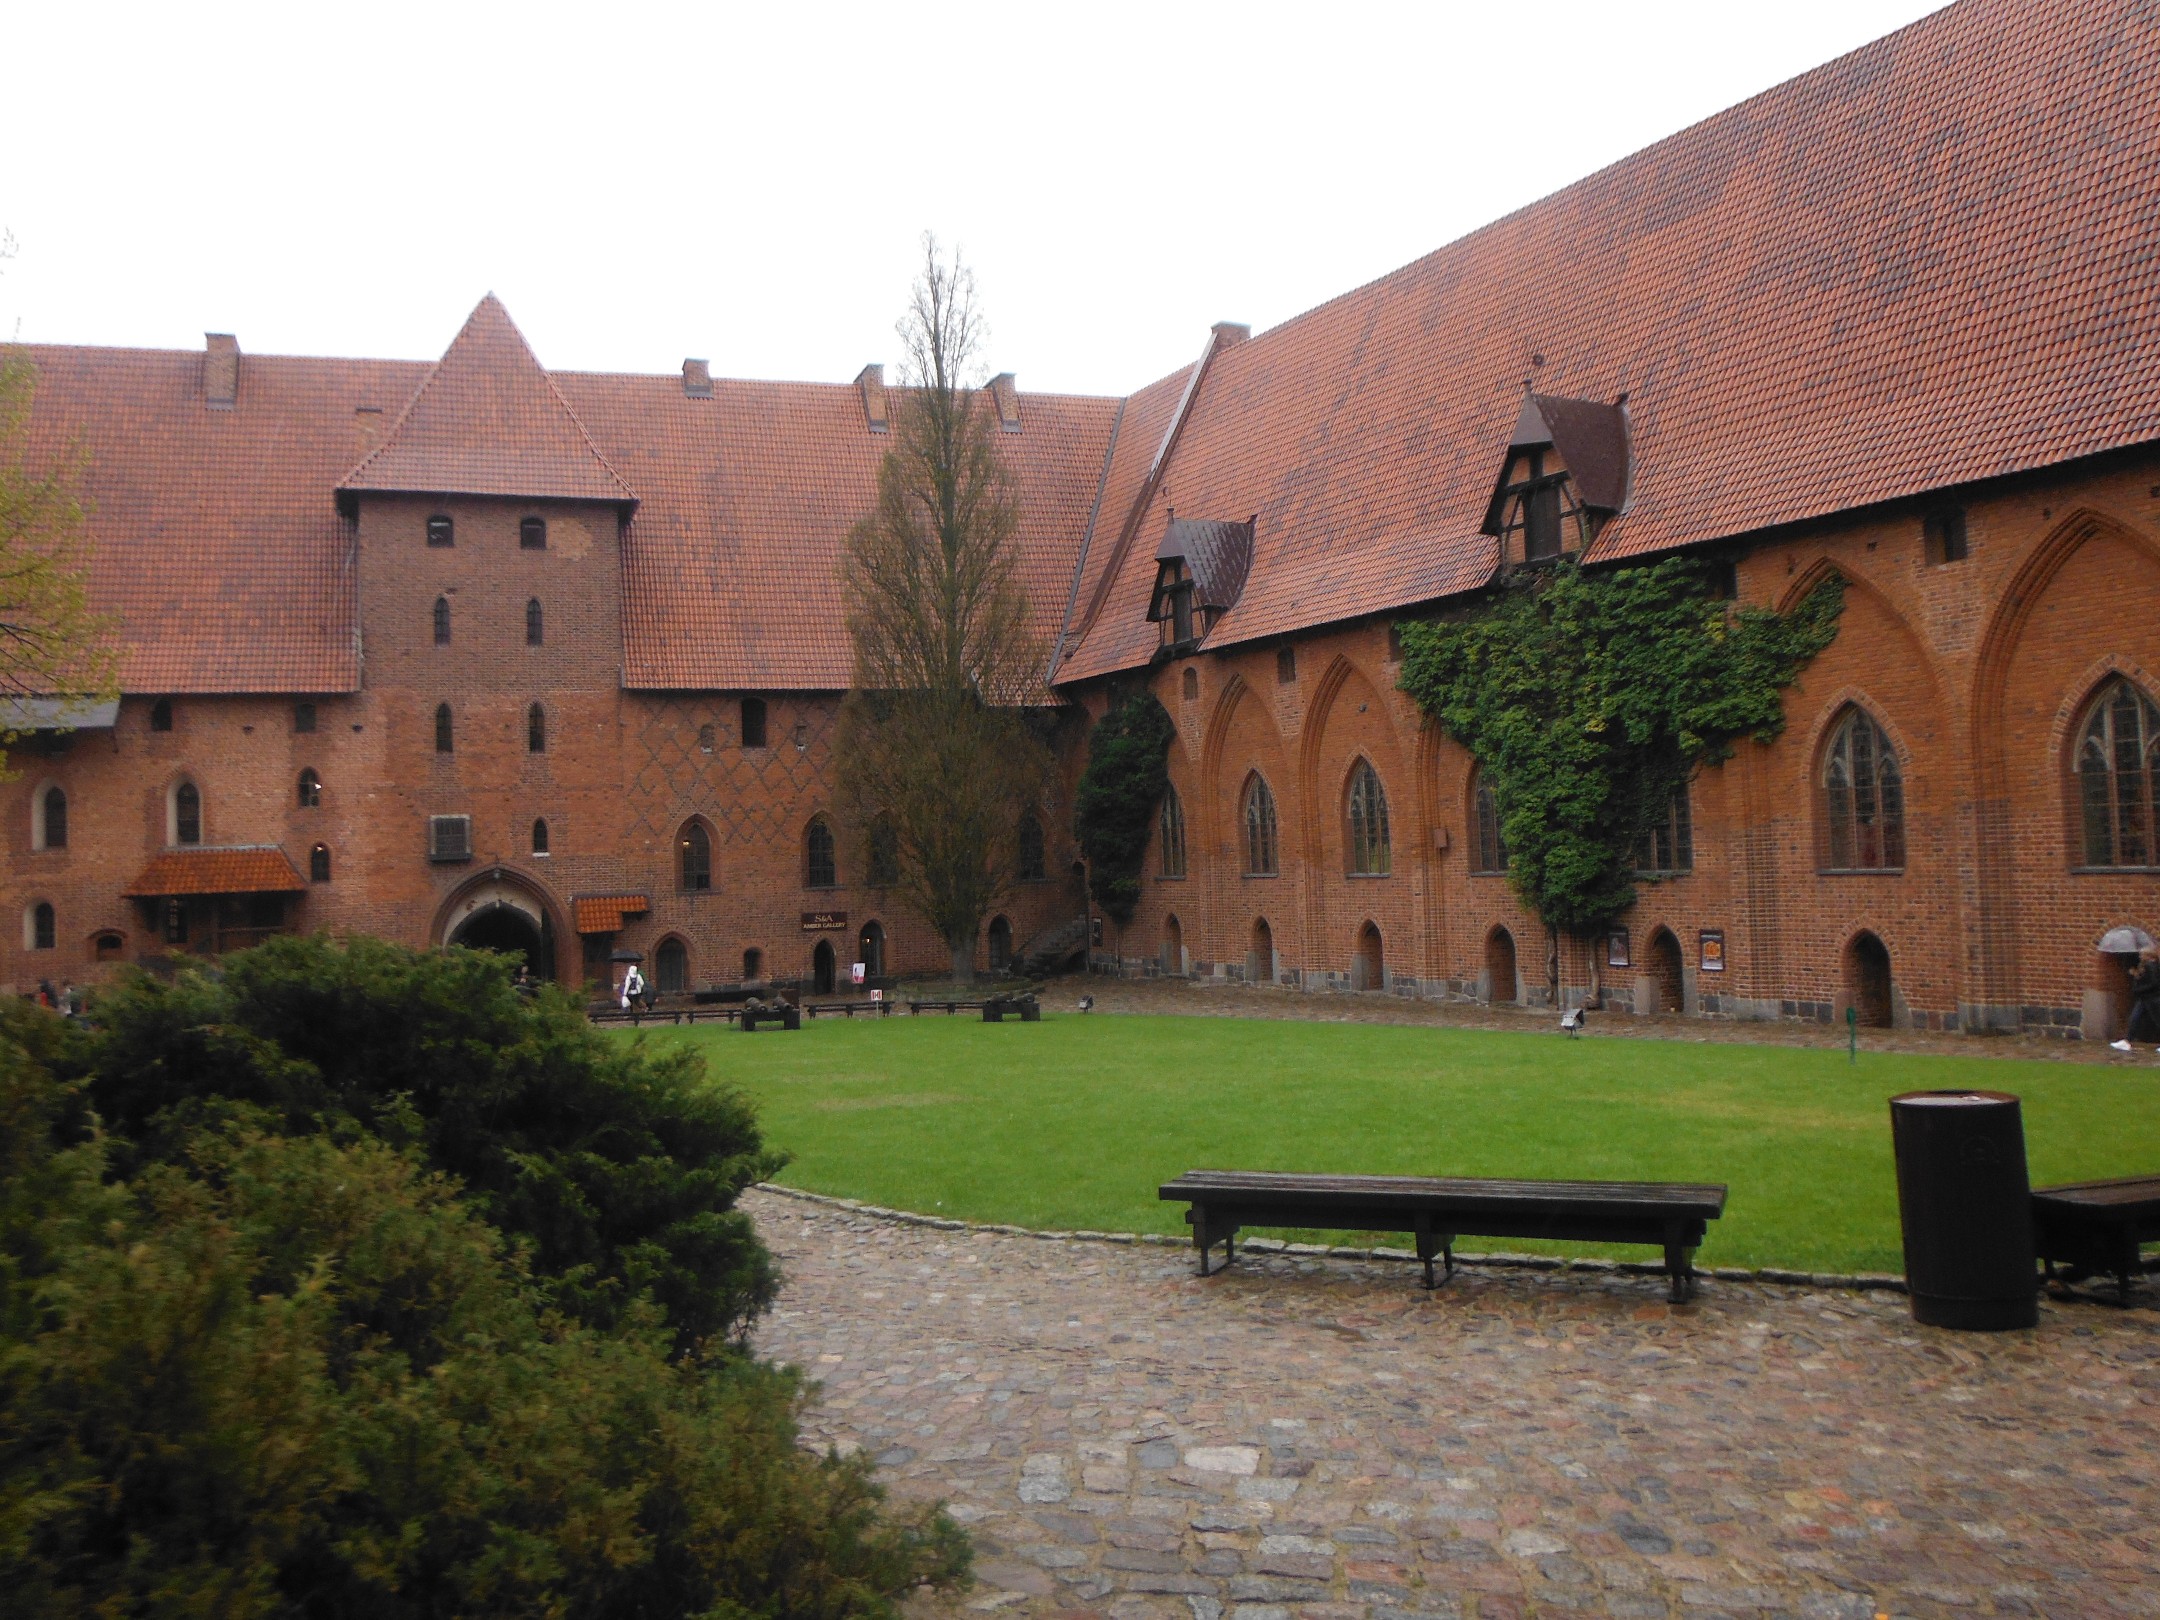 10. Zamek w Malborku